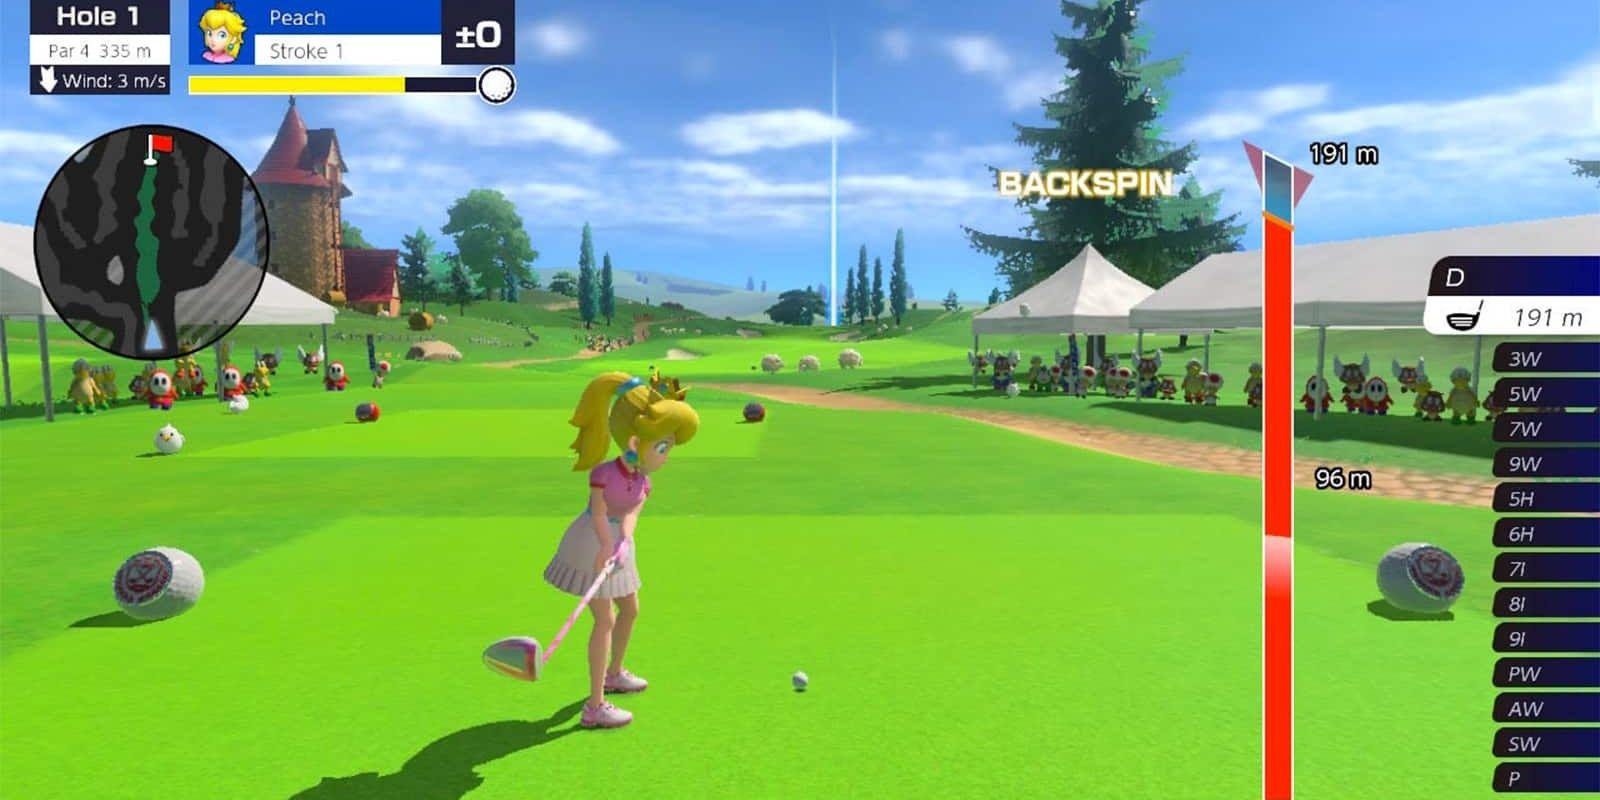 Peach hitting a backspin shot in Mario Golf Super Rush